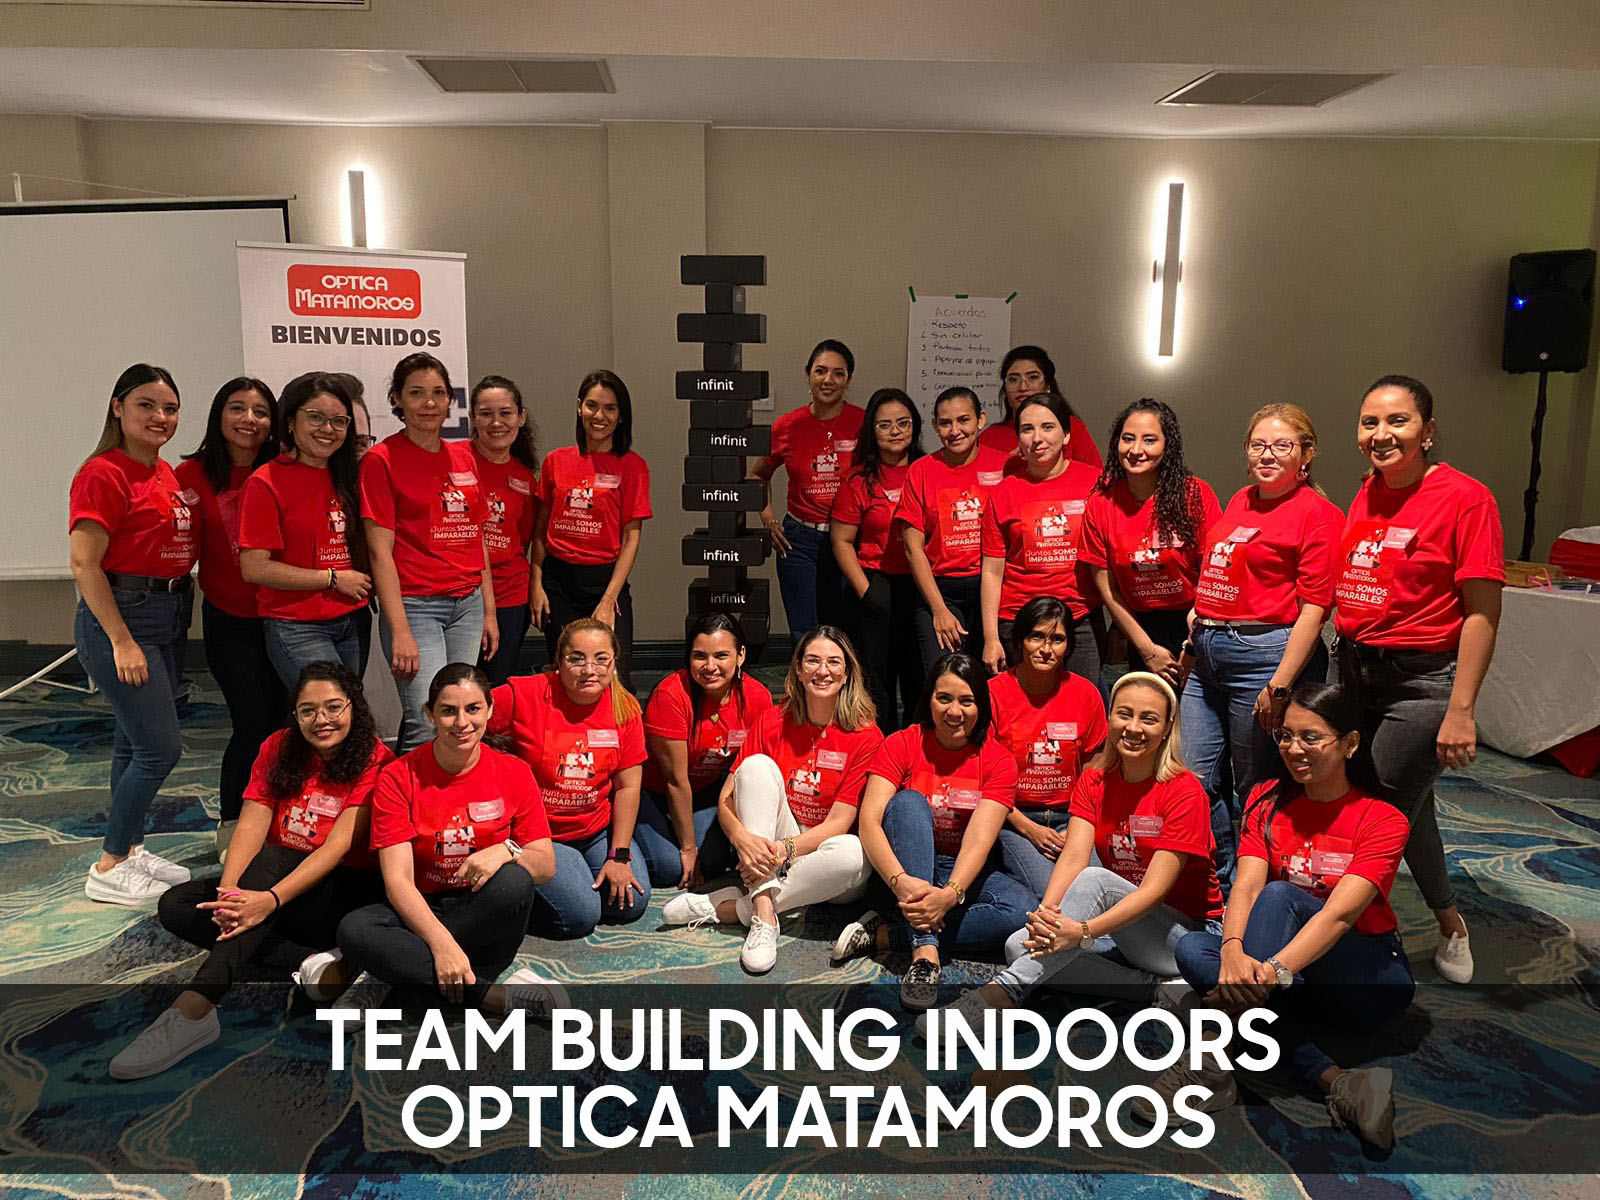 Team Building indoors optica matamoros